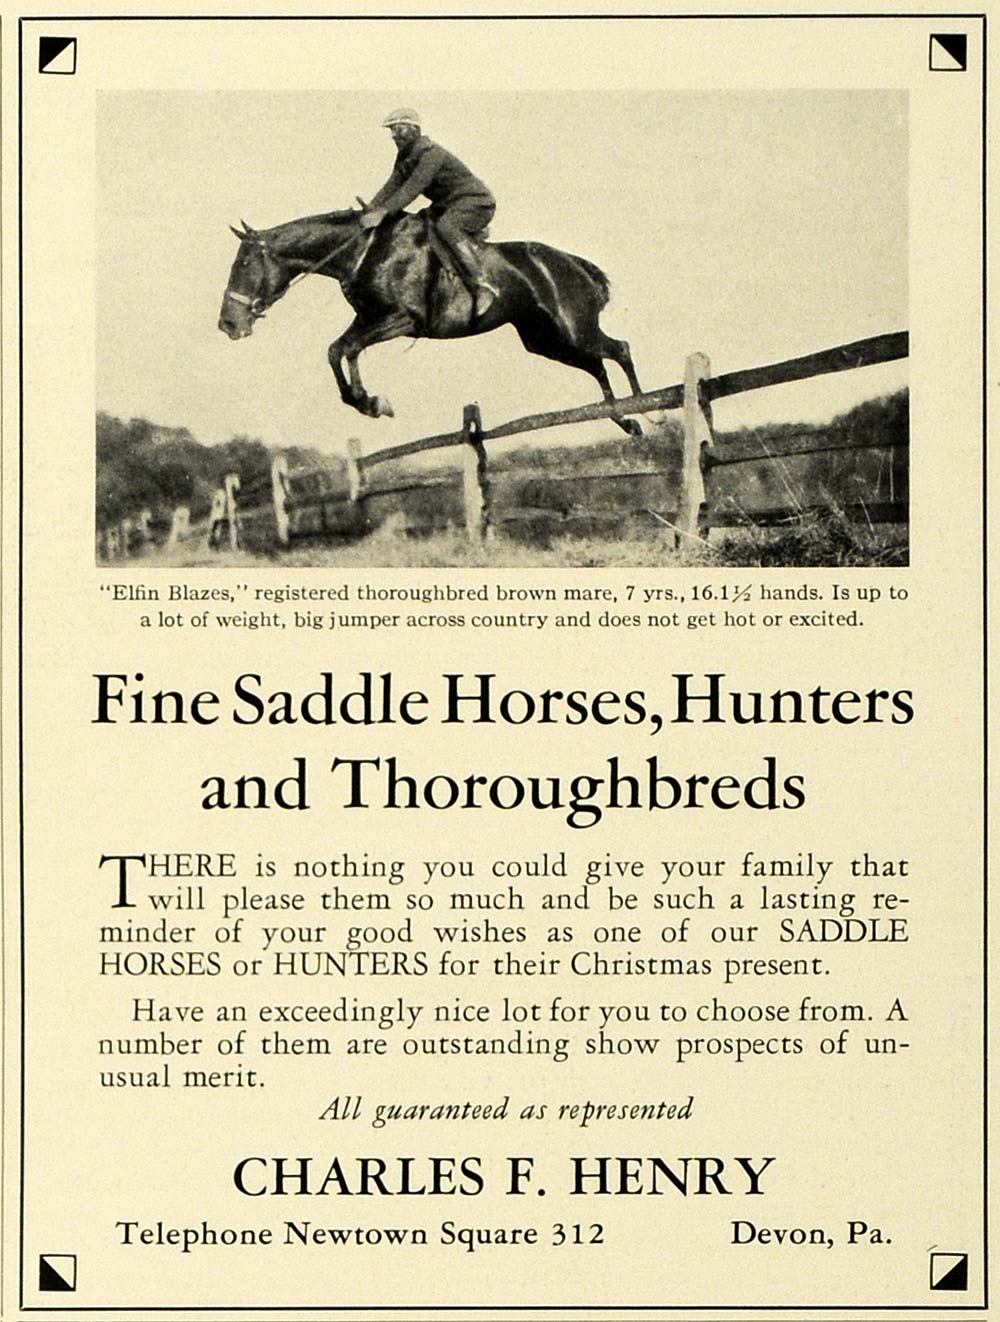 1931 Ad Charles F. Henry Thoroughbred Horse Breeder - ORIGINAL ADVERTISING SPM1